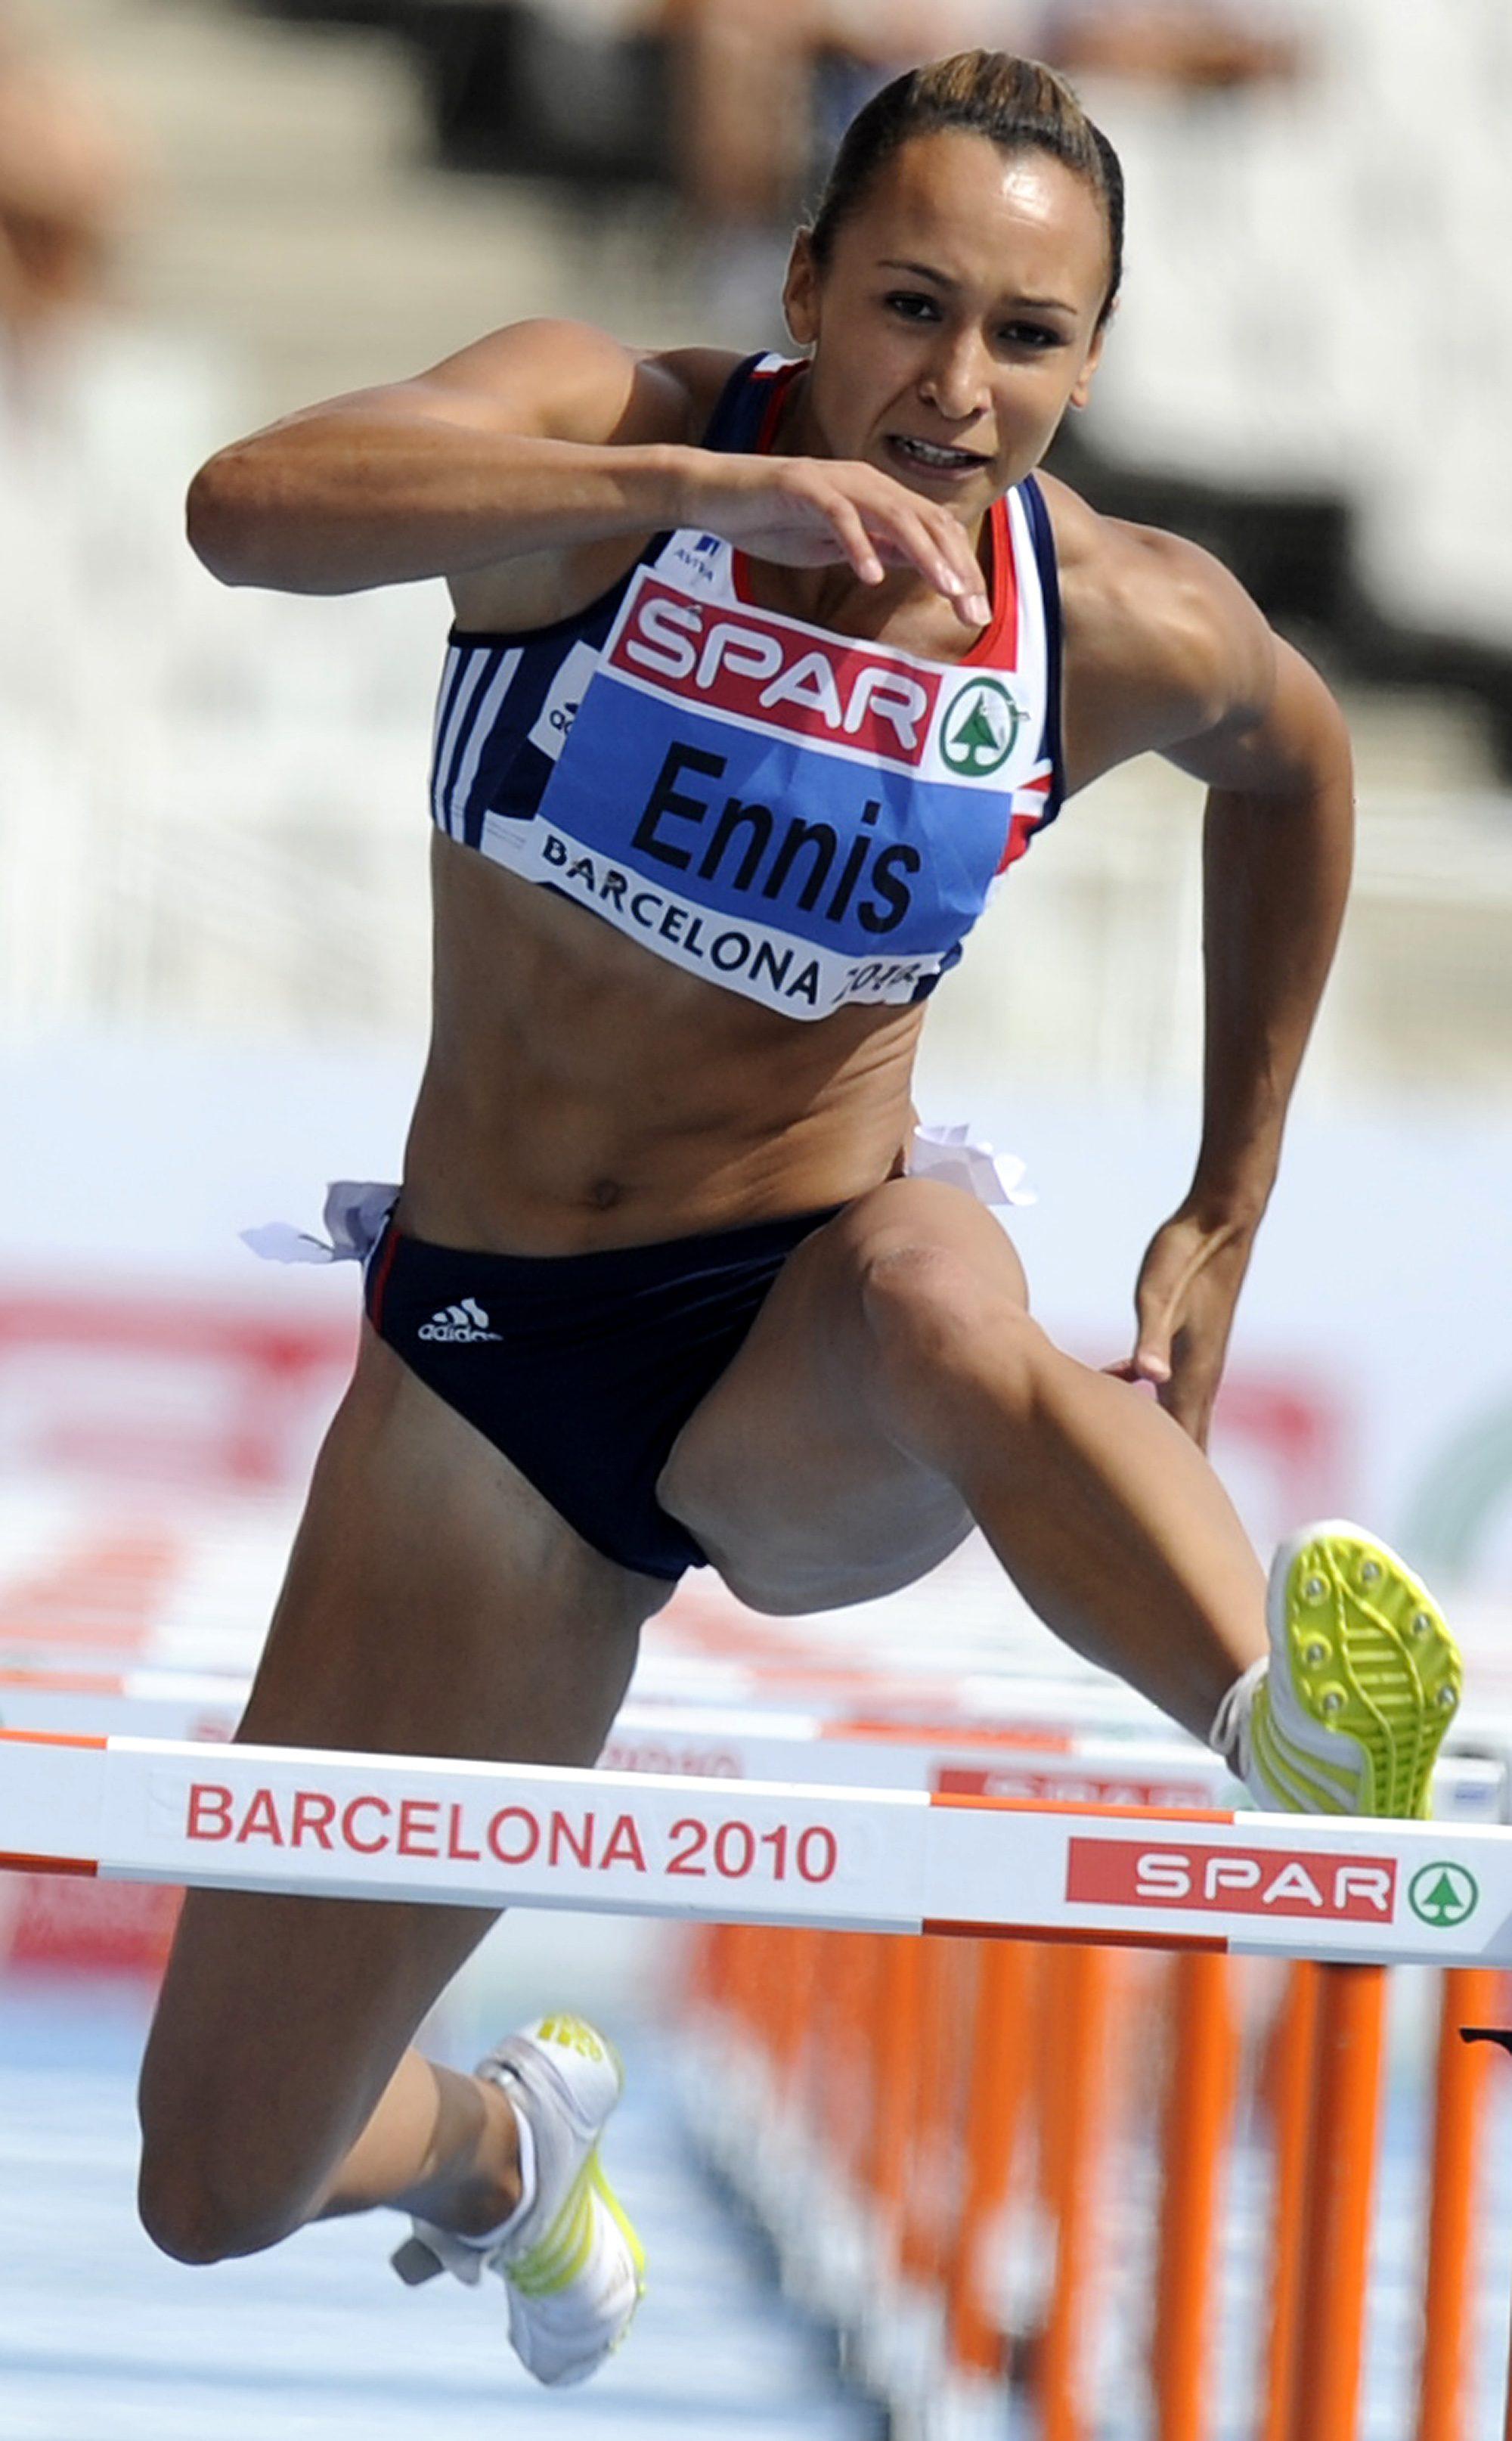 Sexy Athletes - Jessica Ennis long jump and hurdles x39 : アスリート達の ...